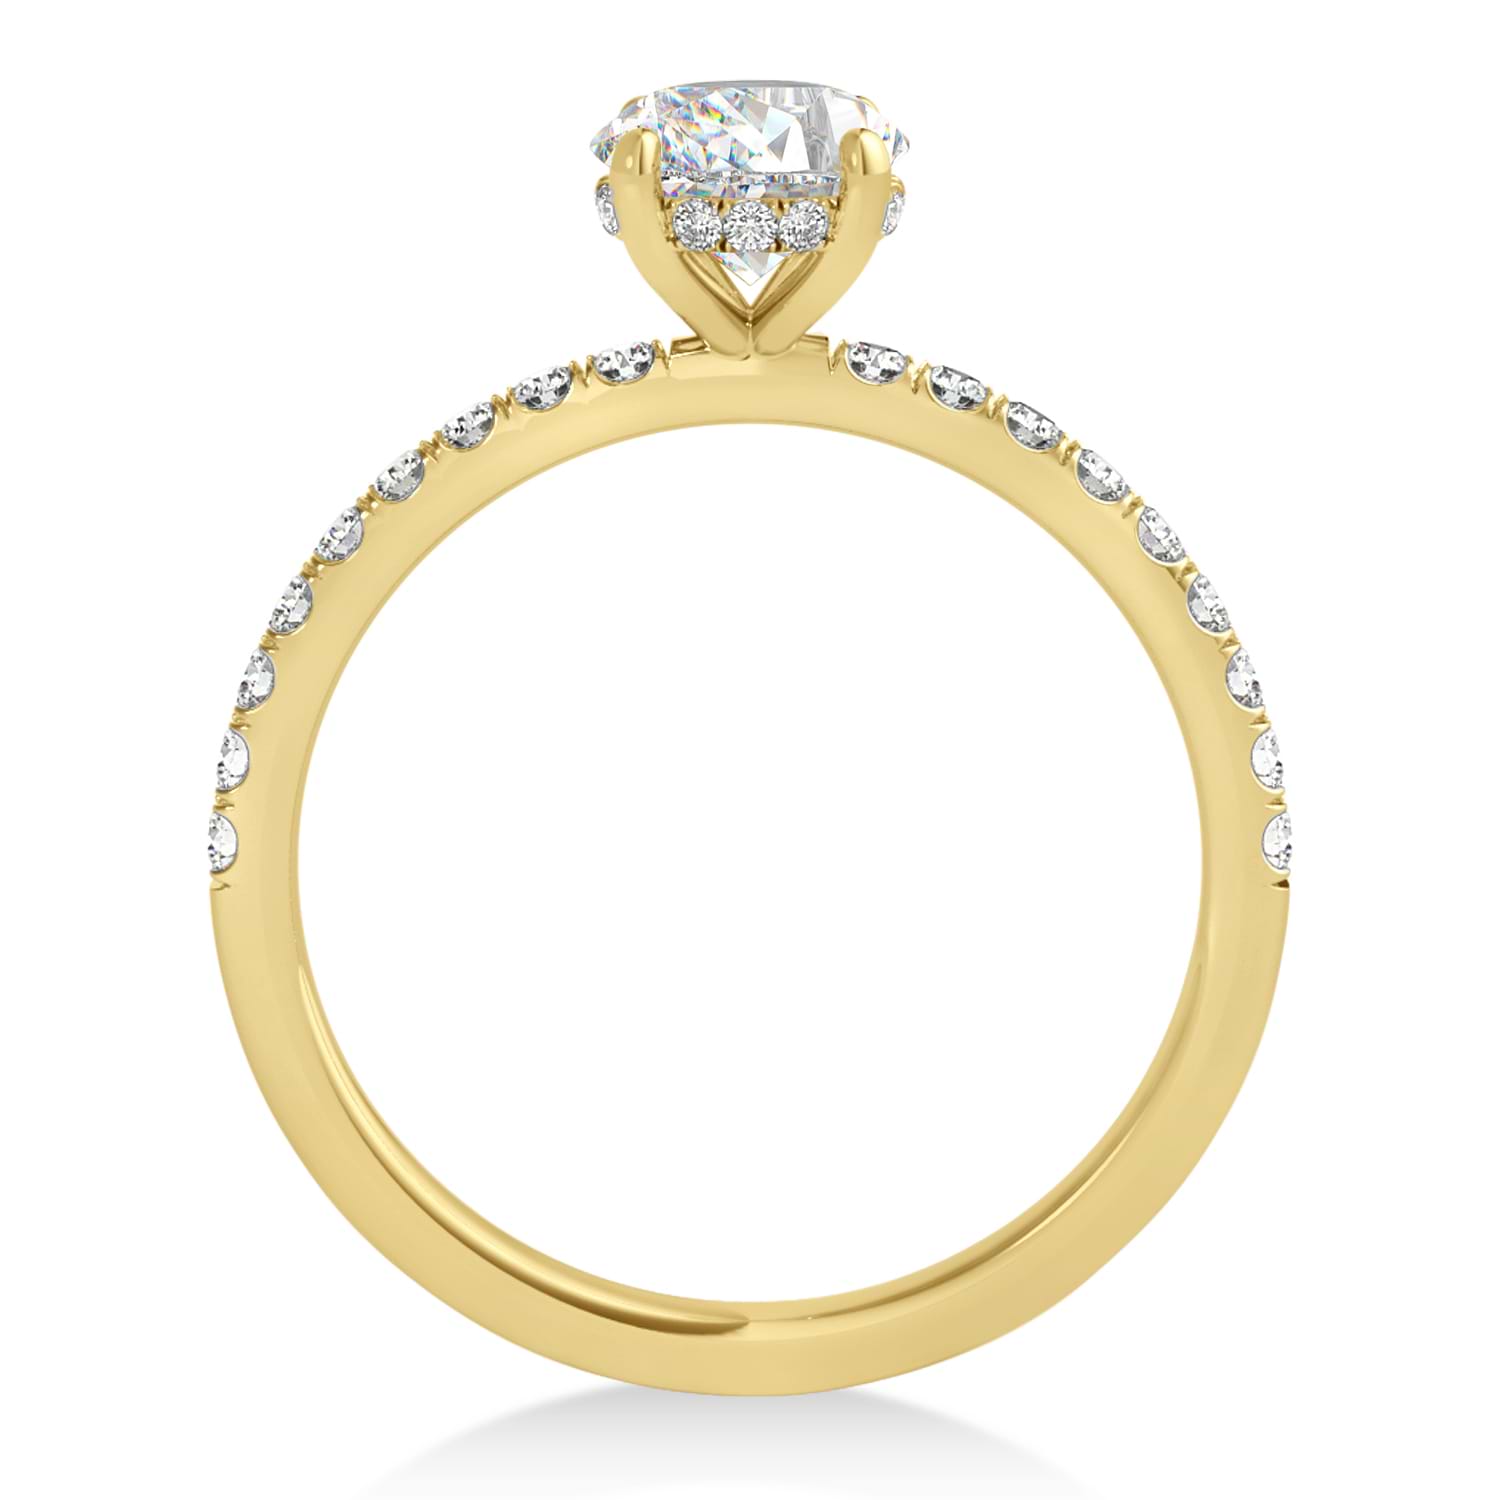 Emerald Moissanite & Diamond Single Row Hidden Halo Engagement Ring 18k Yellow Gold (1.31ct)